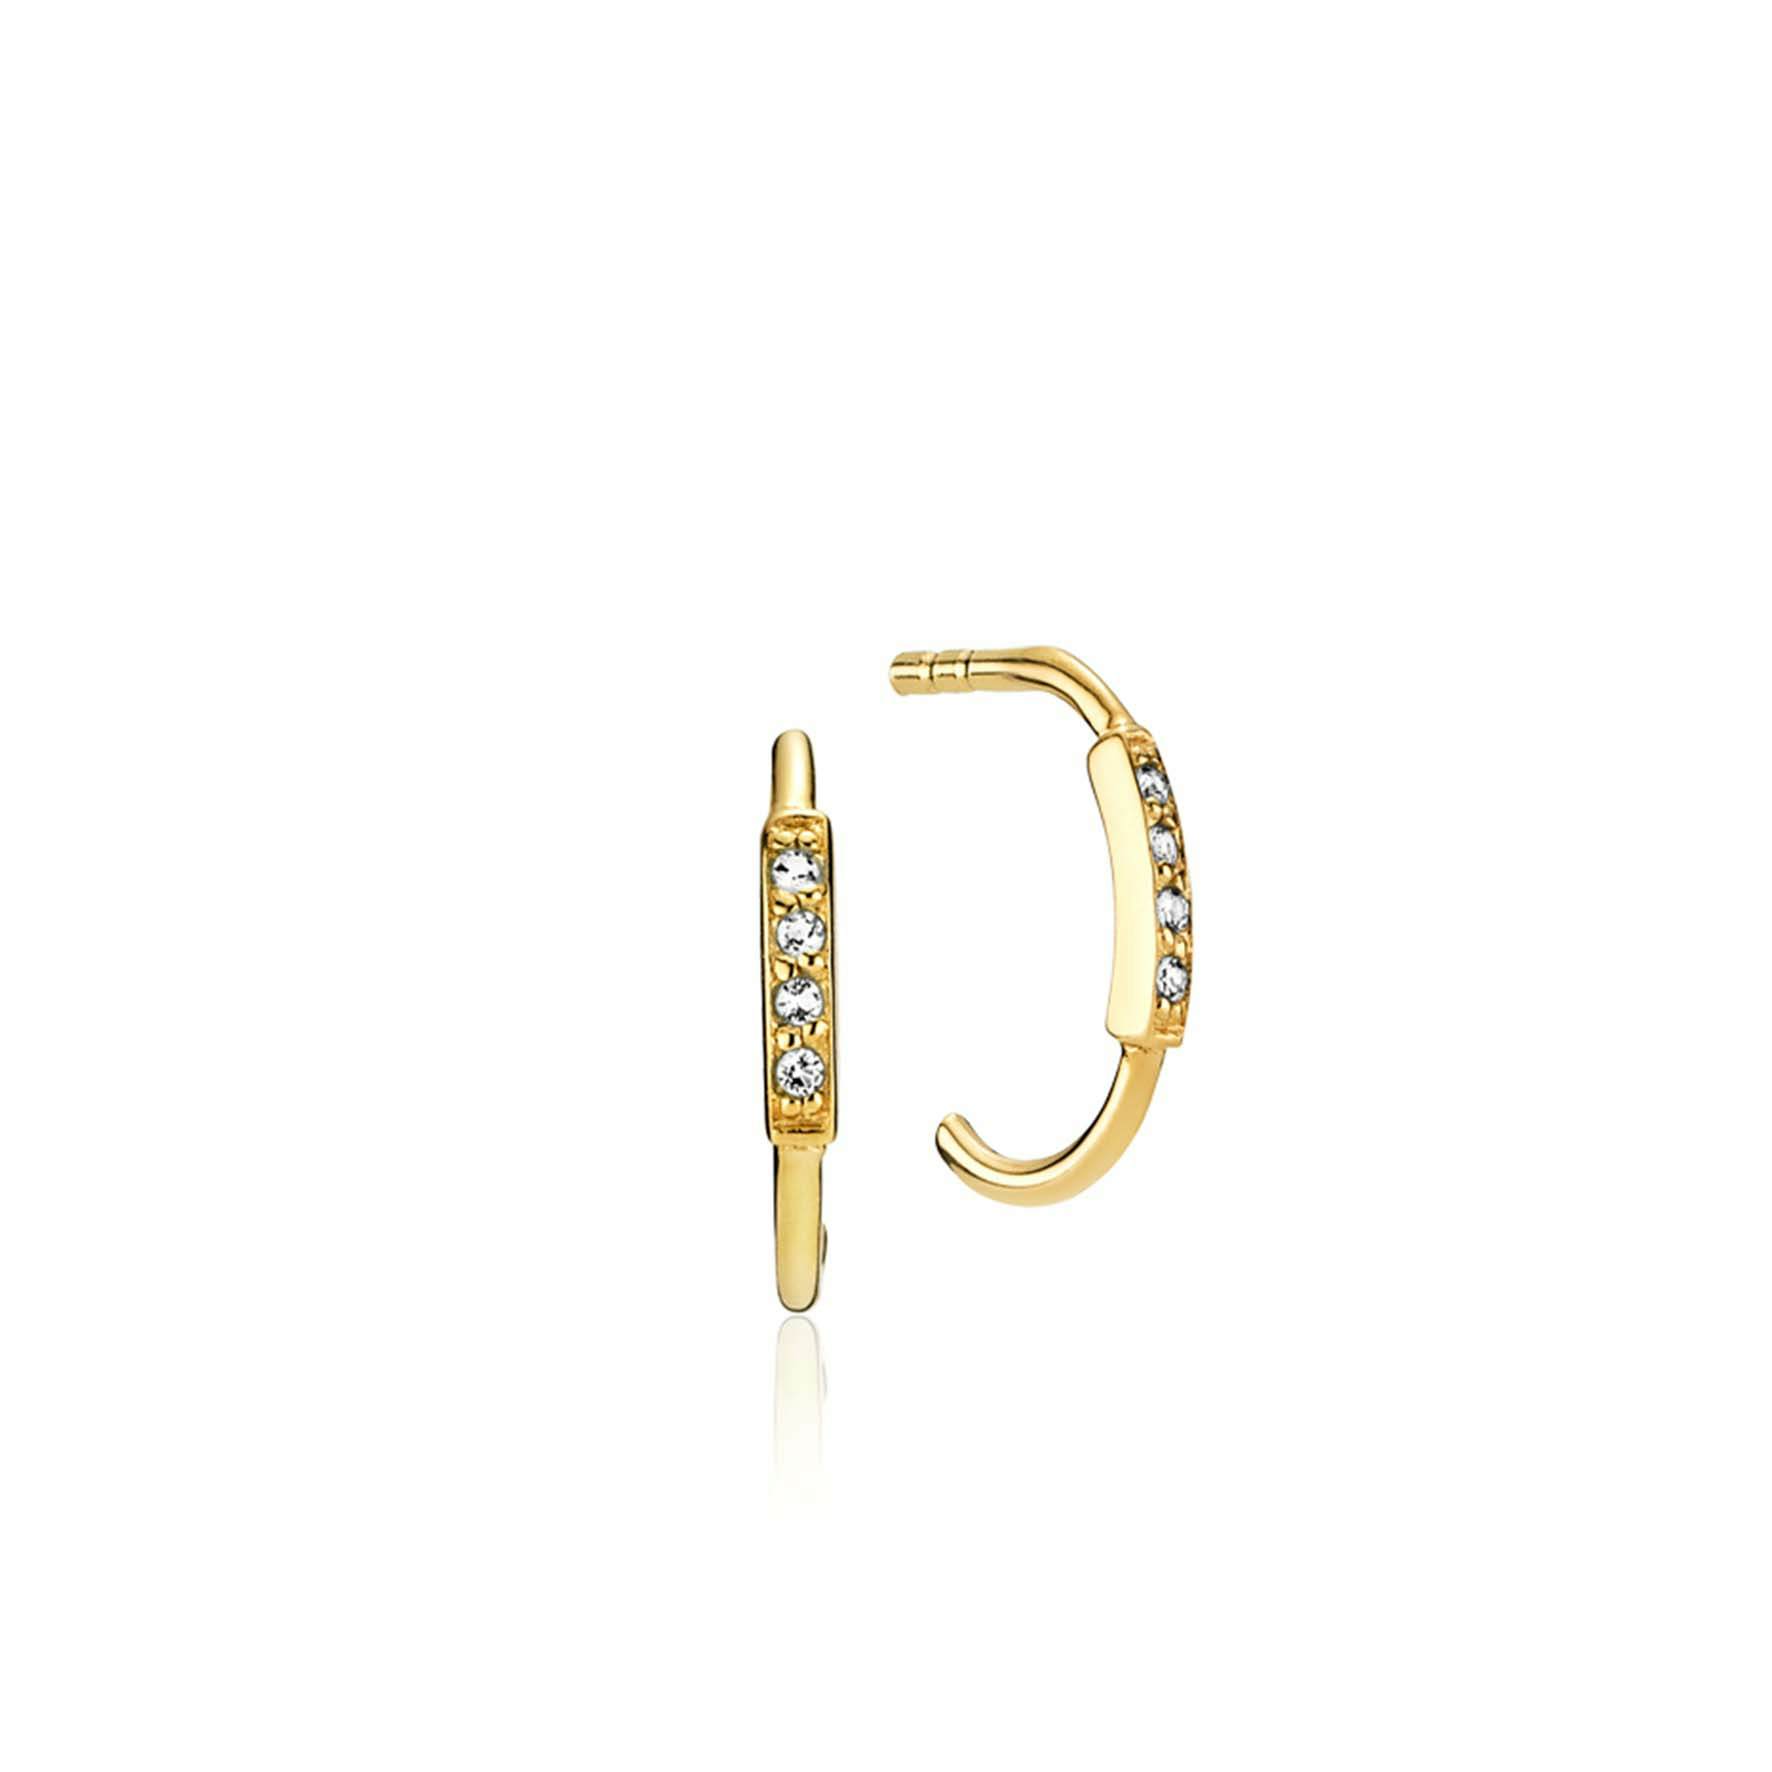 Brilliant Earrings von Sistie in Vergoldet-Silber Sterling 925